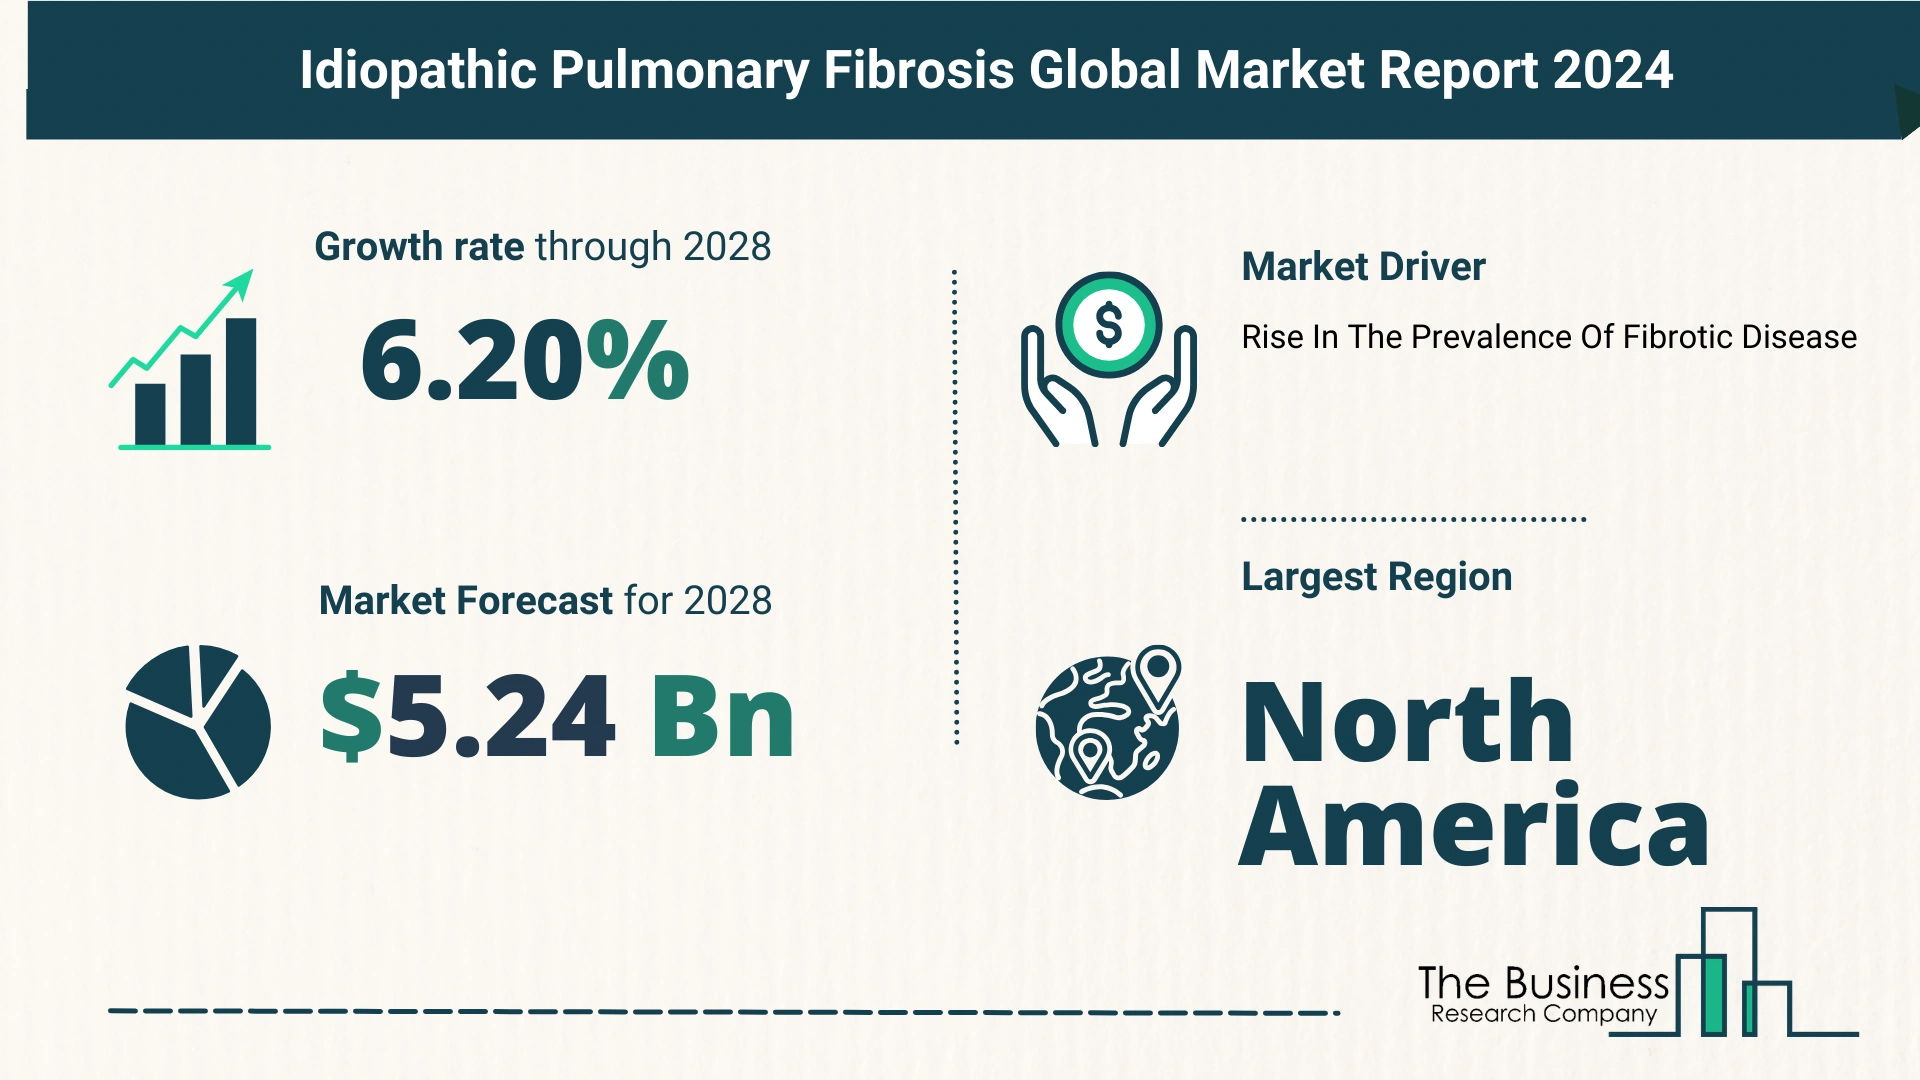 Global Idiopathic Pulmonary Fibrosis Market Size